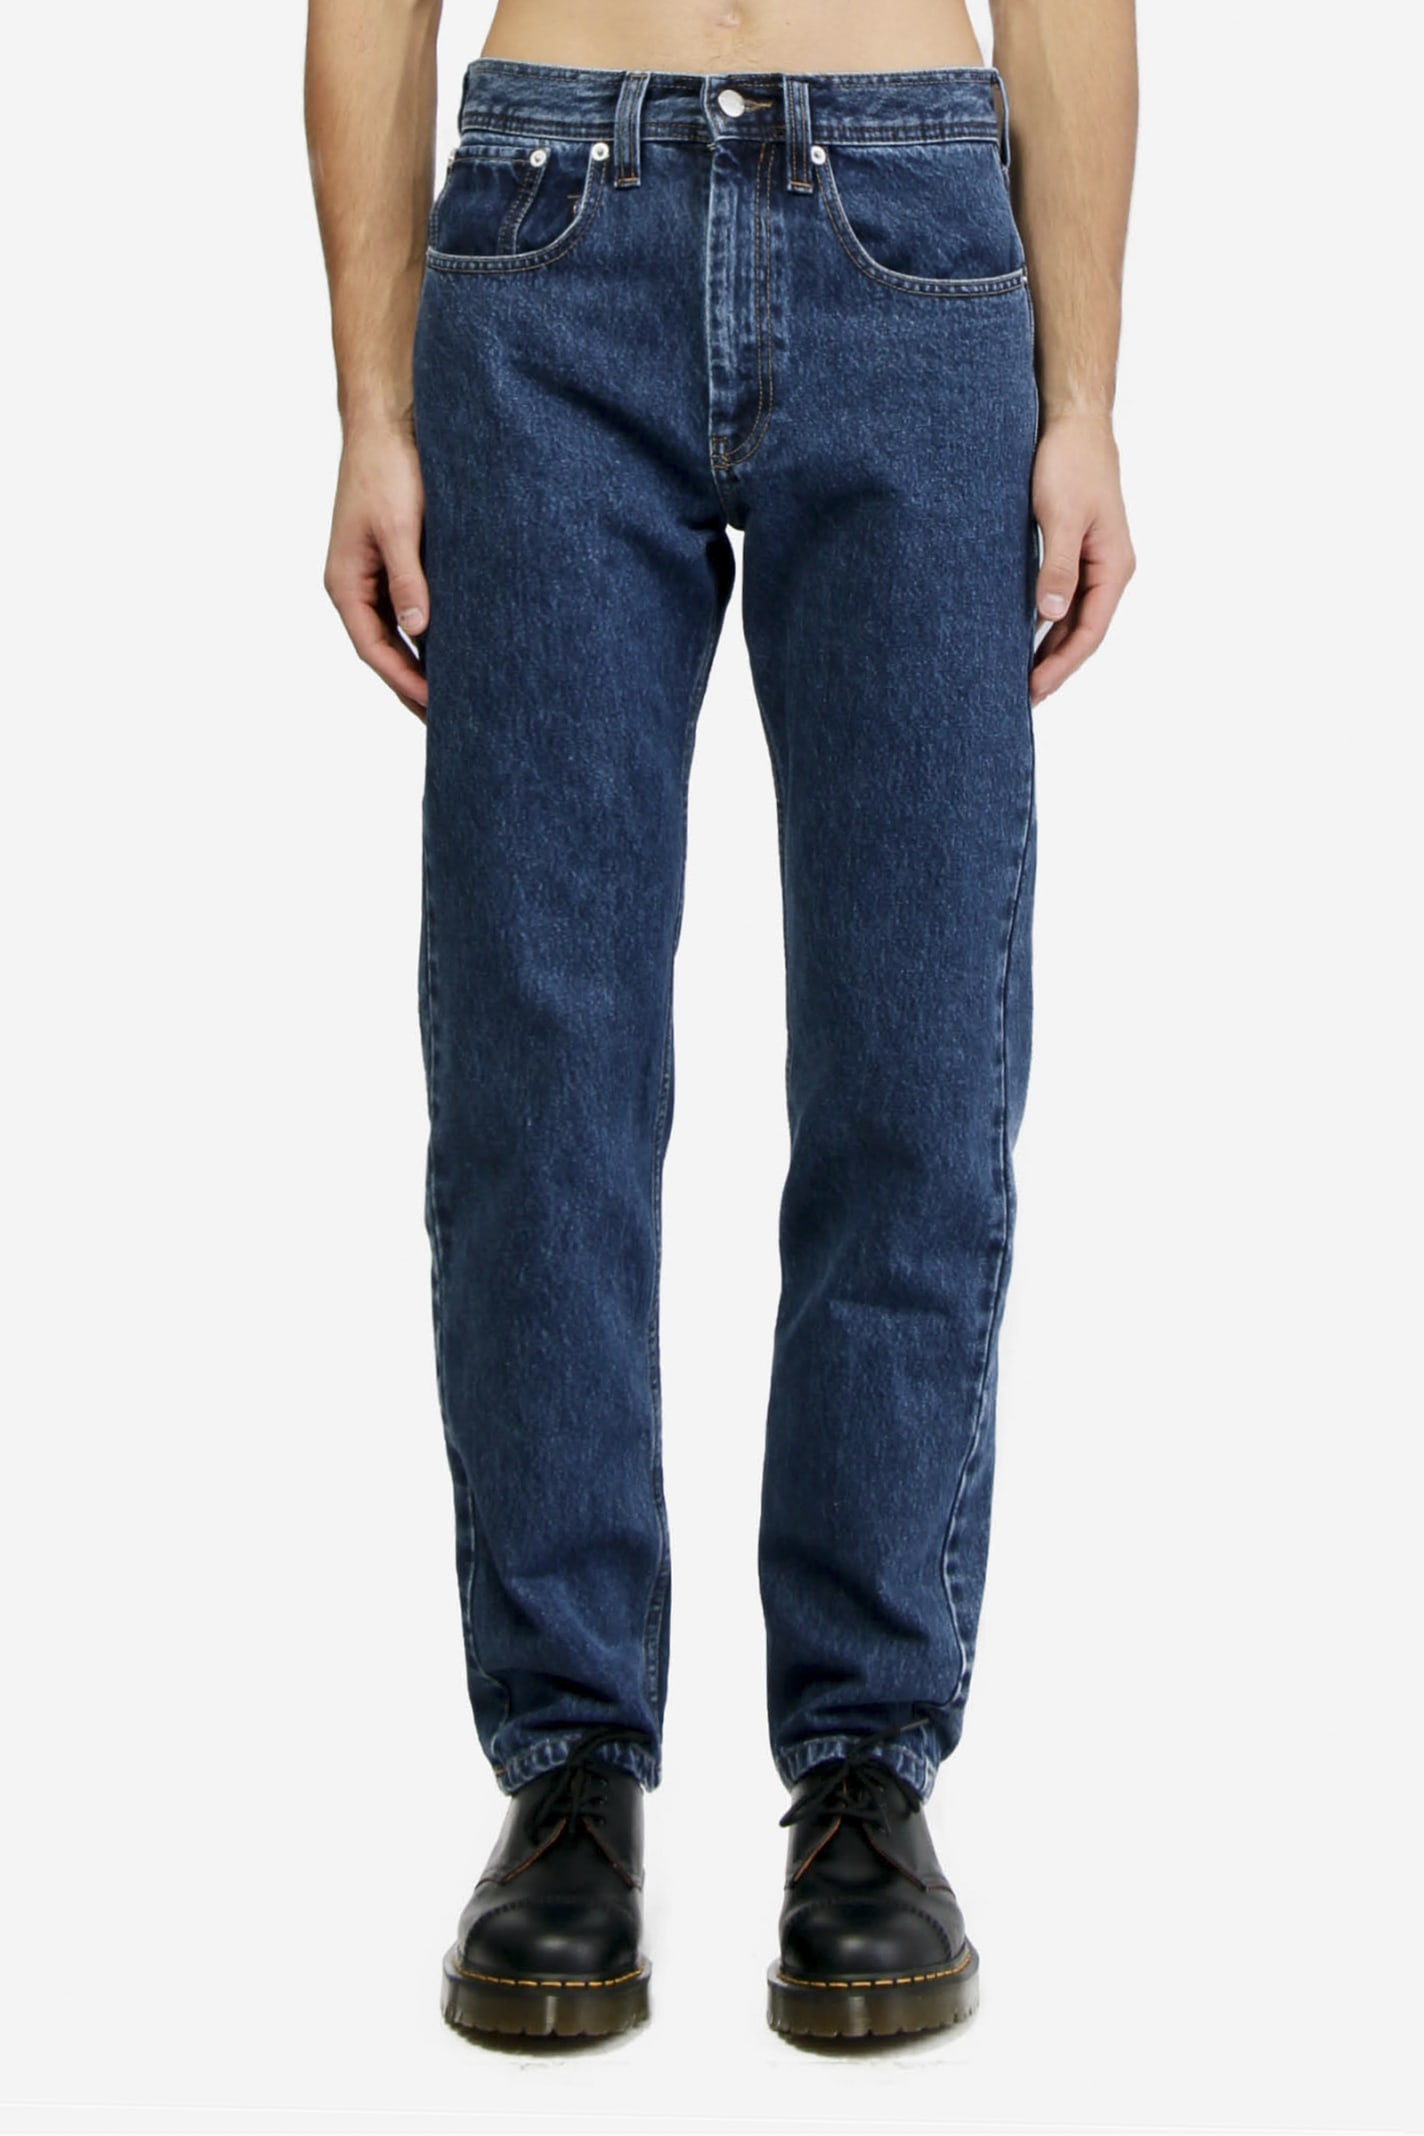 Namacheko Ushi Denim Jeans